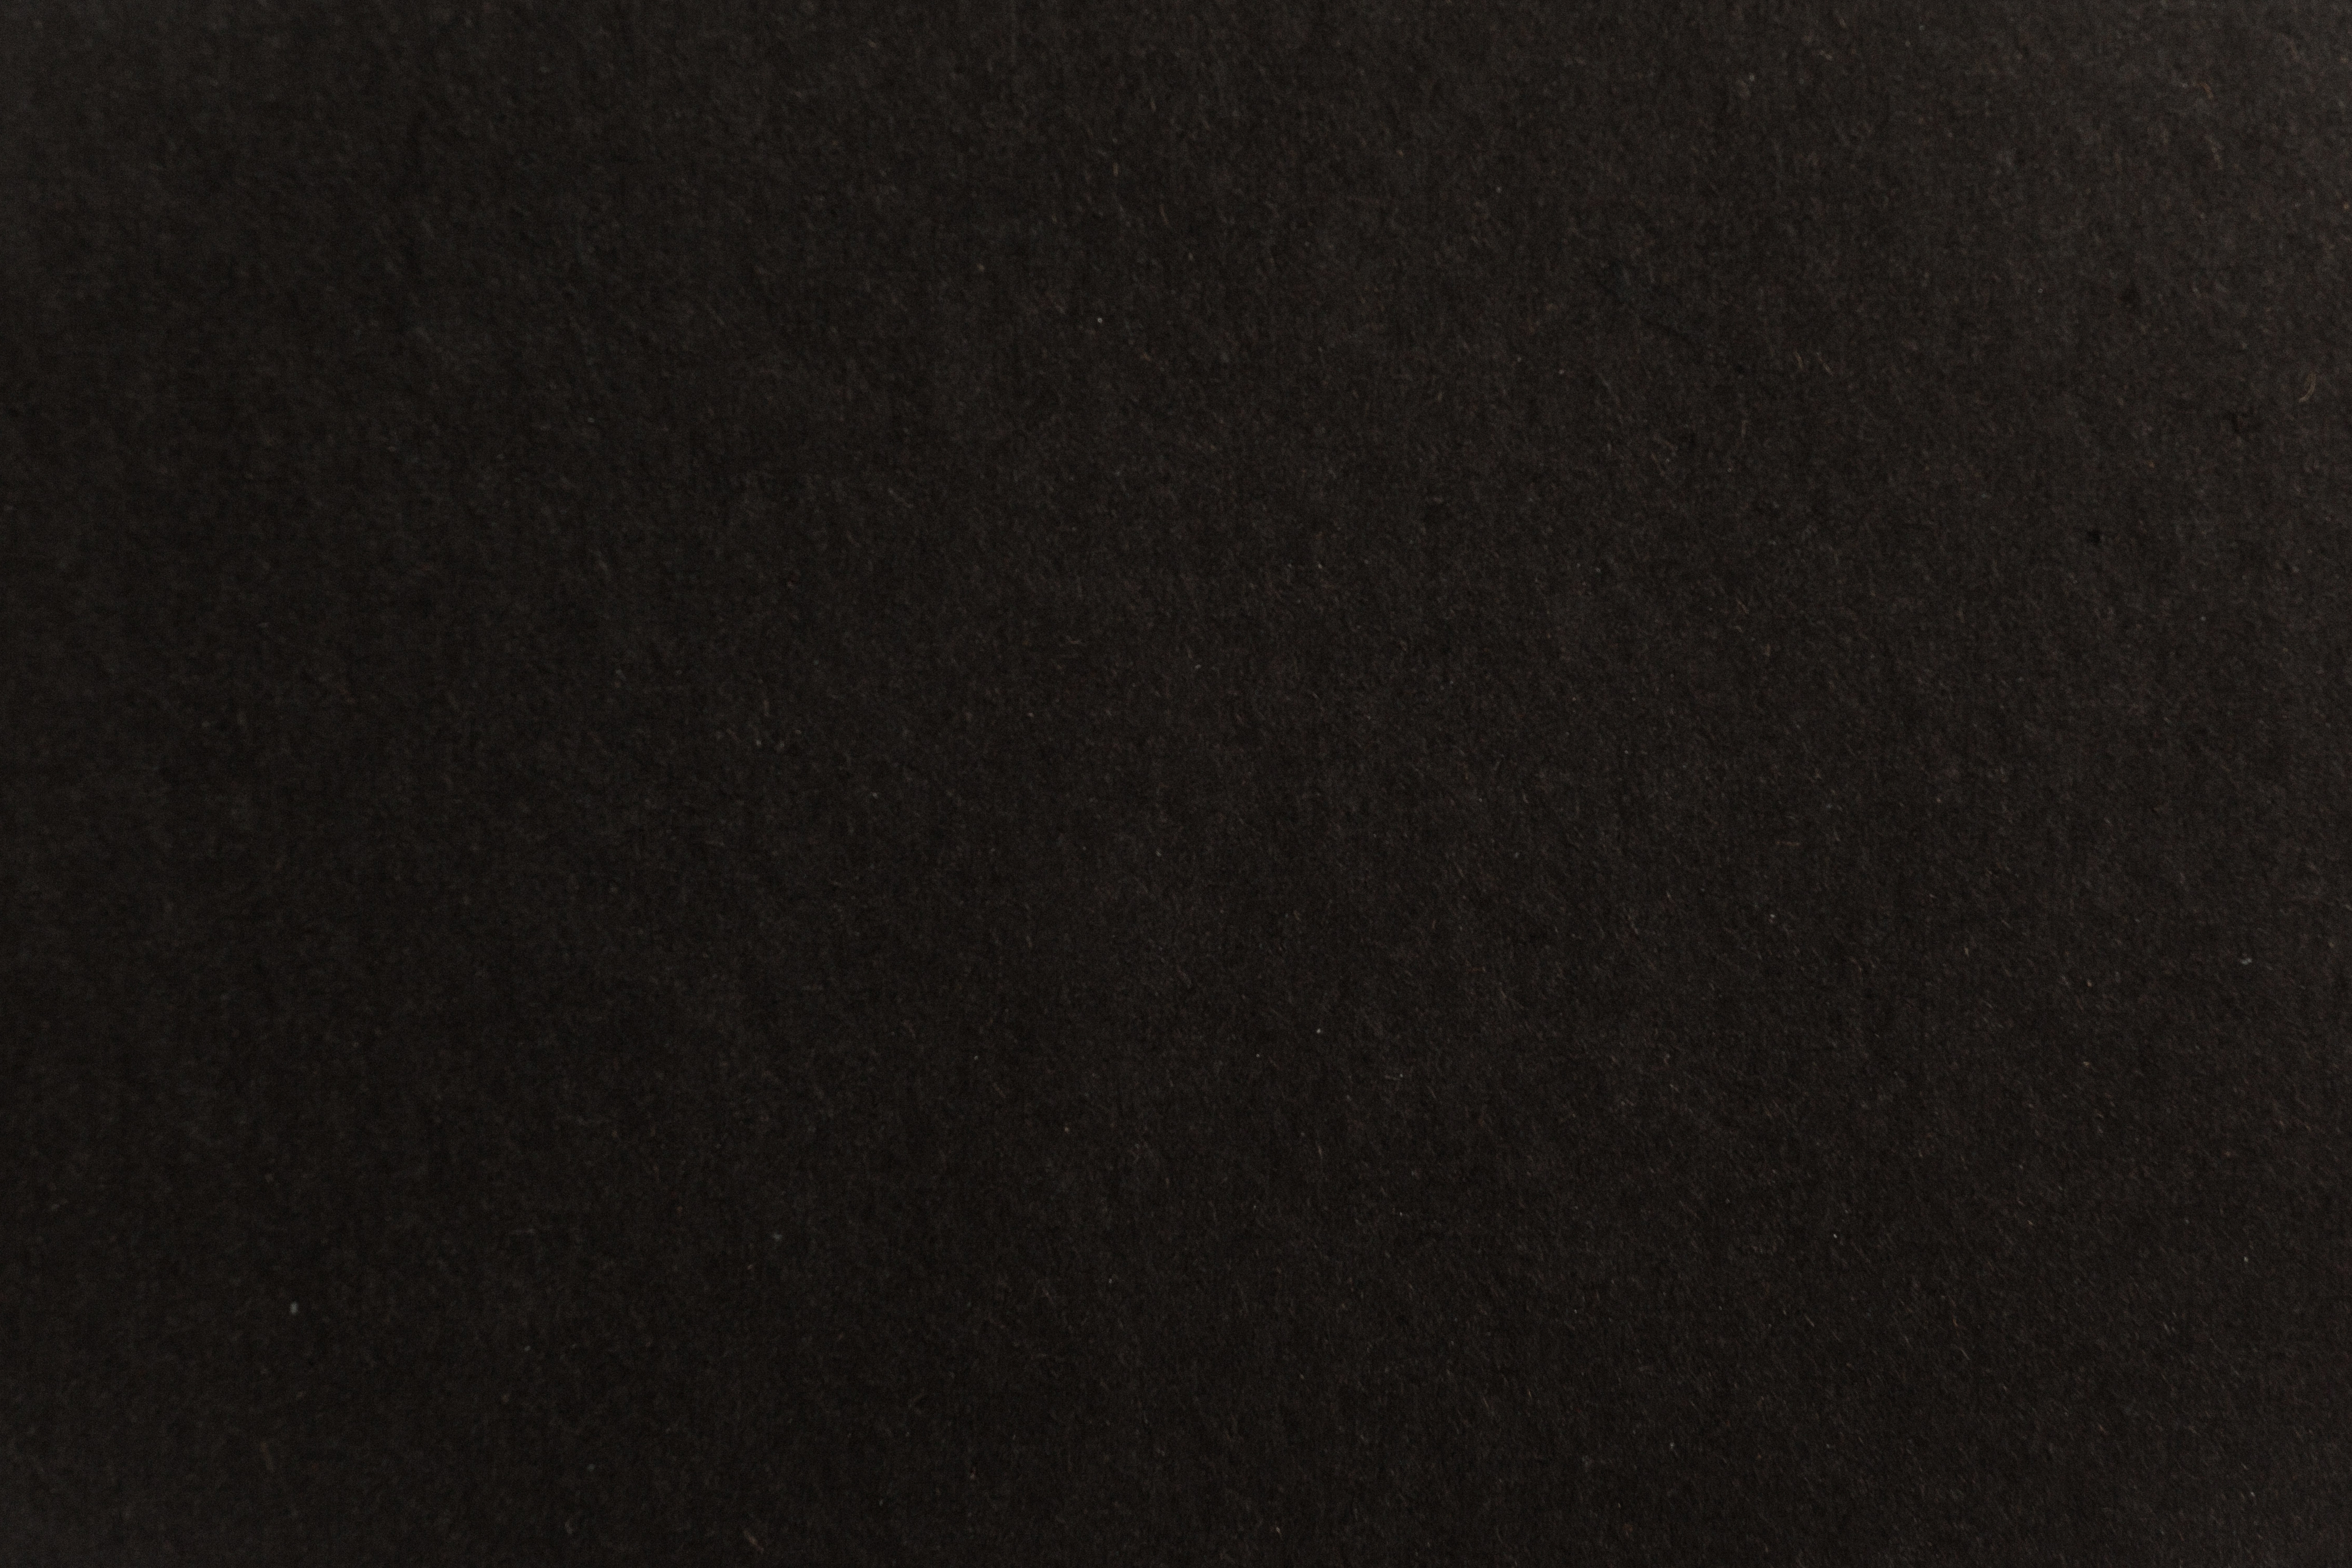 Black paper texture photo